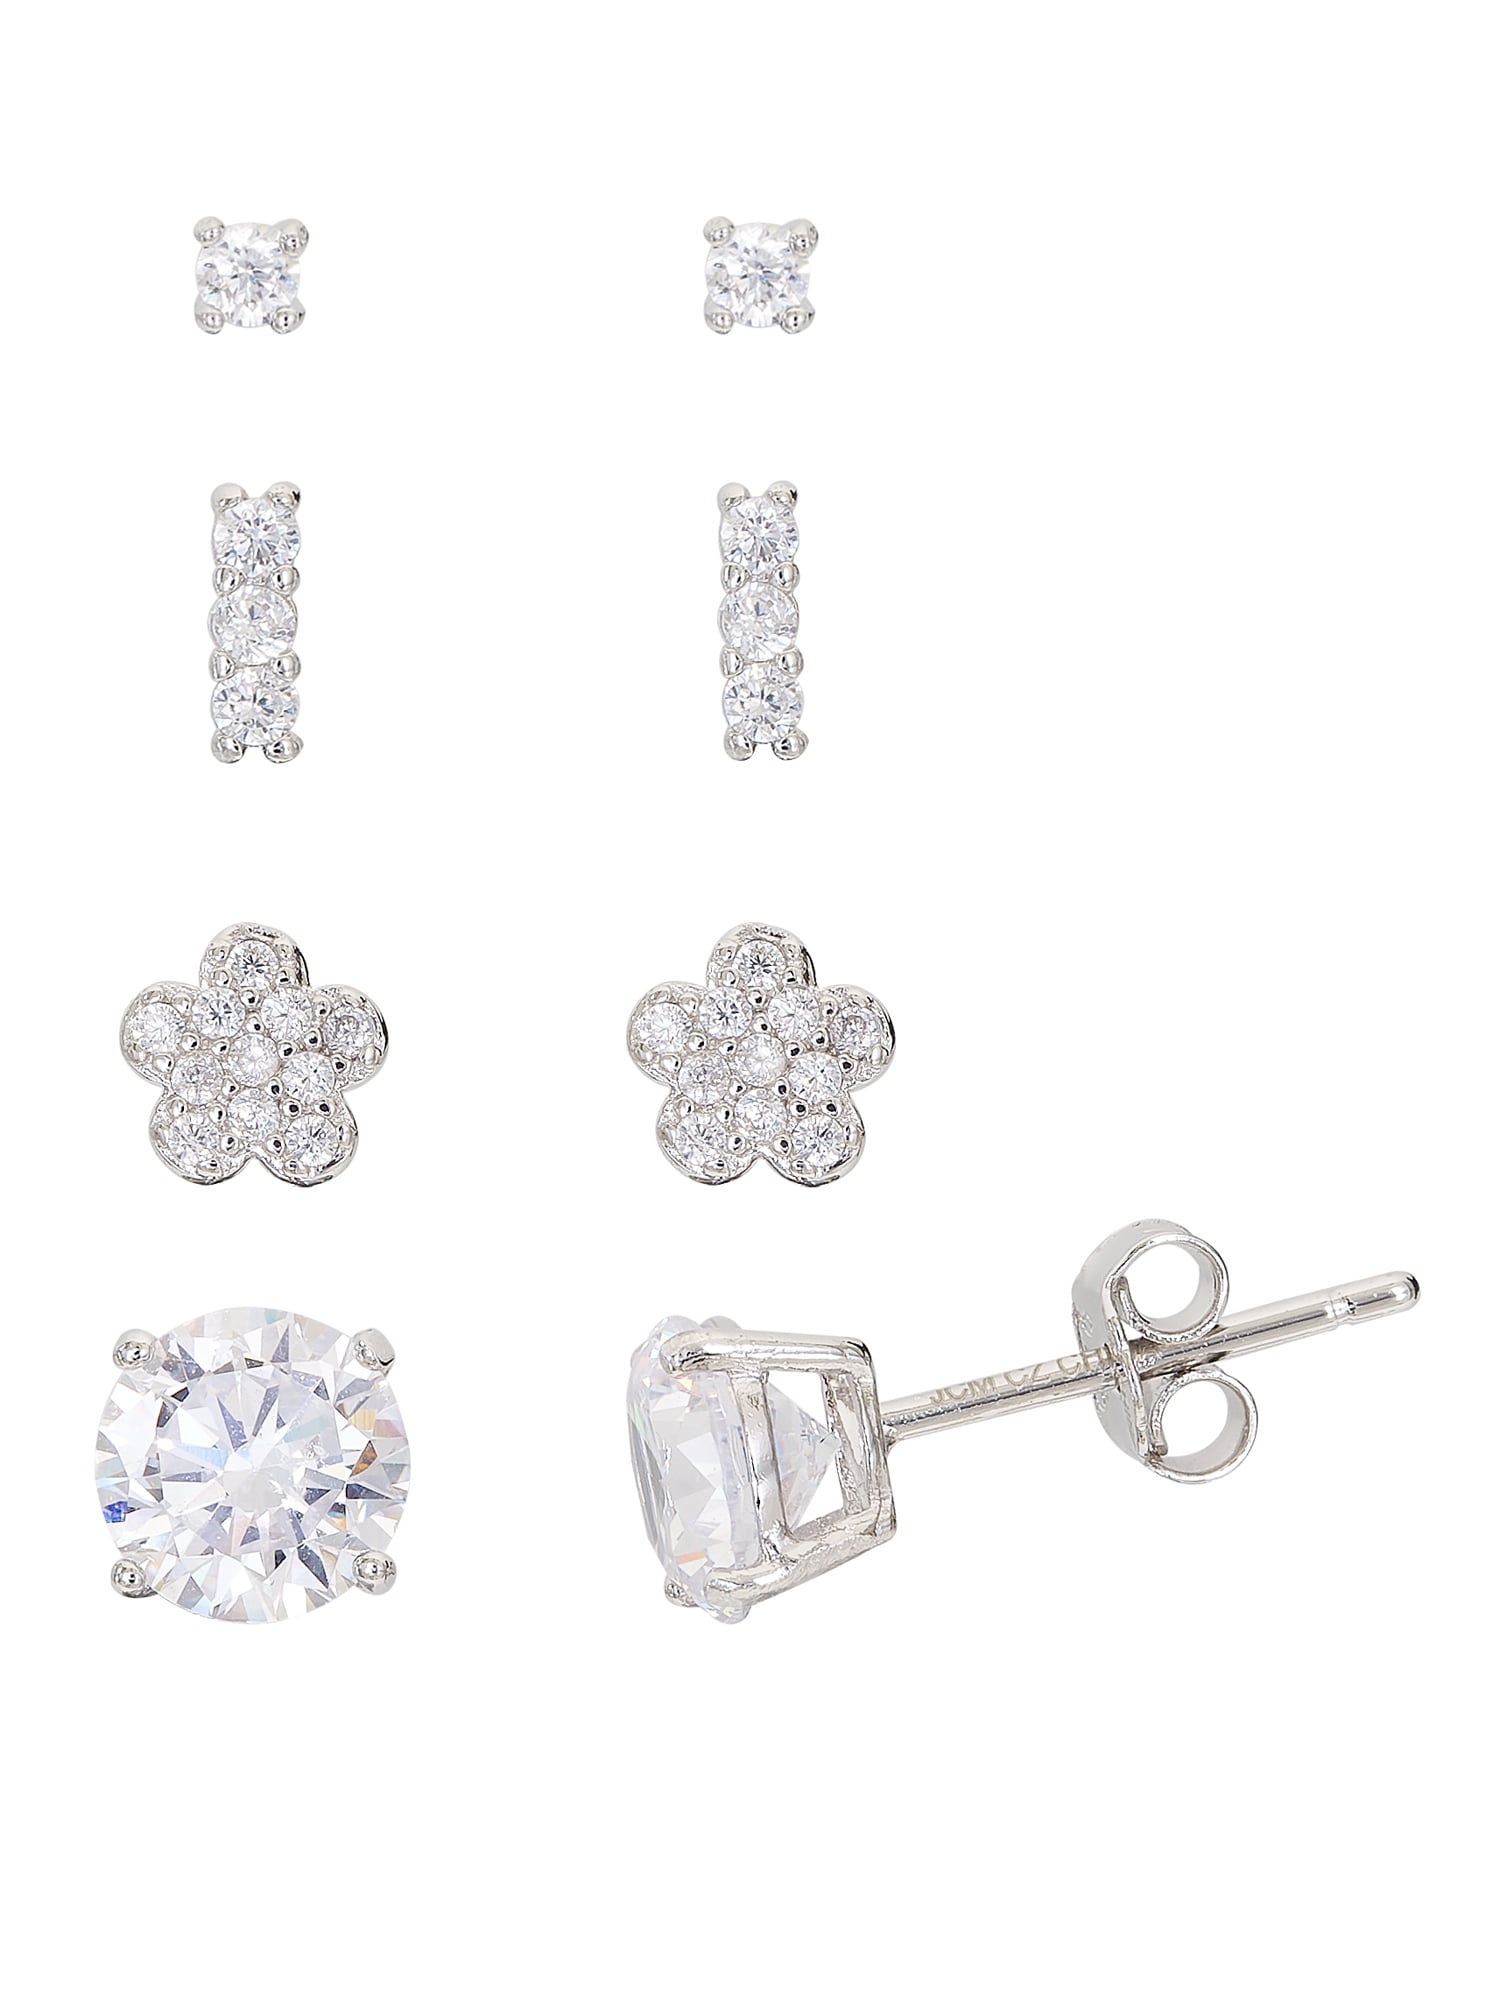 Sterling Silver Flower Dangle Earrings and a pair of 4mm CZ Stud Earrings 